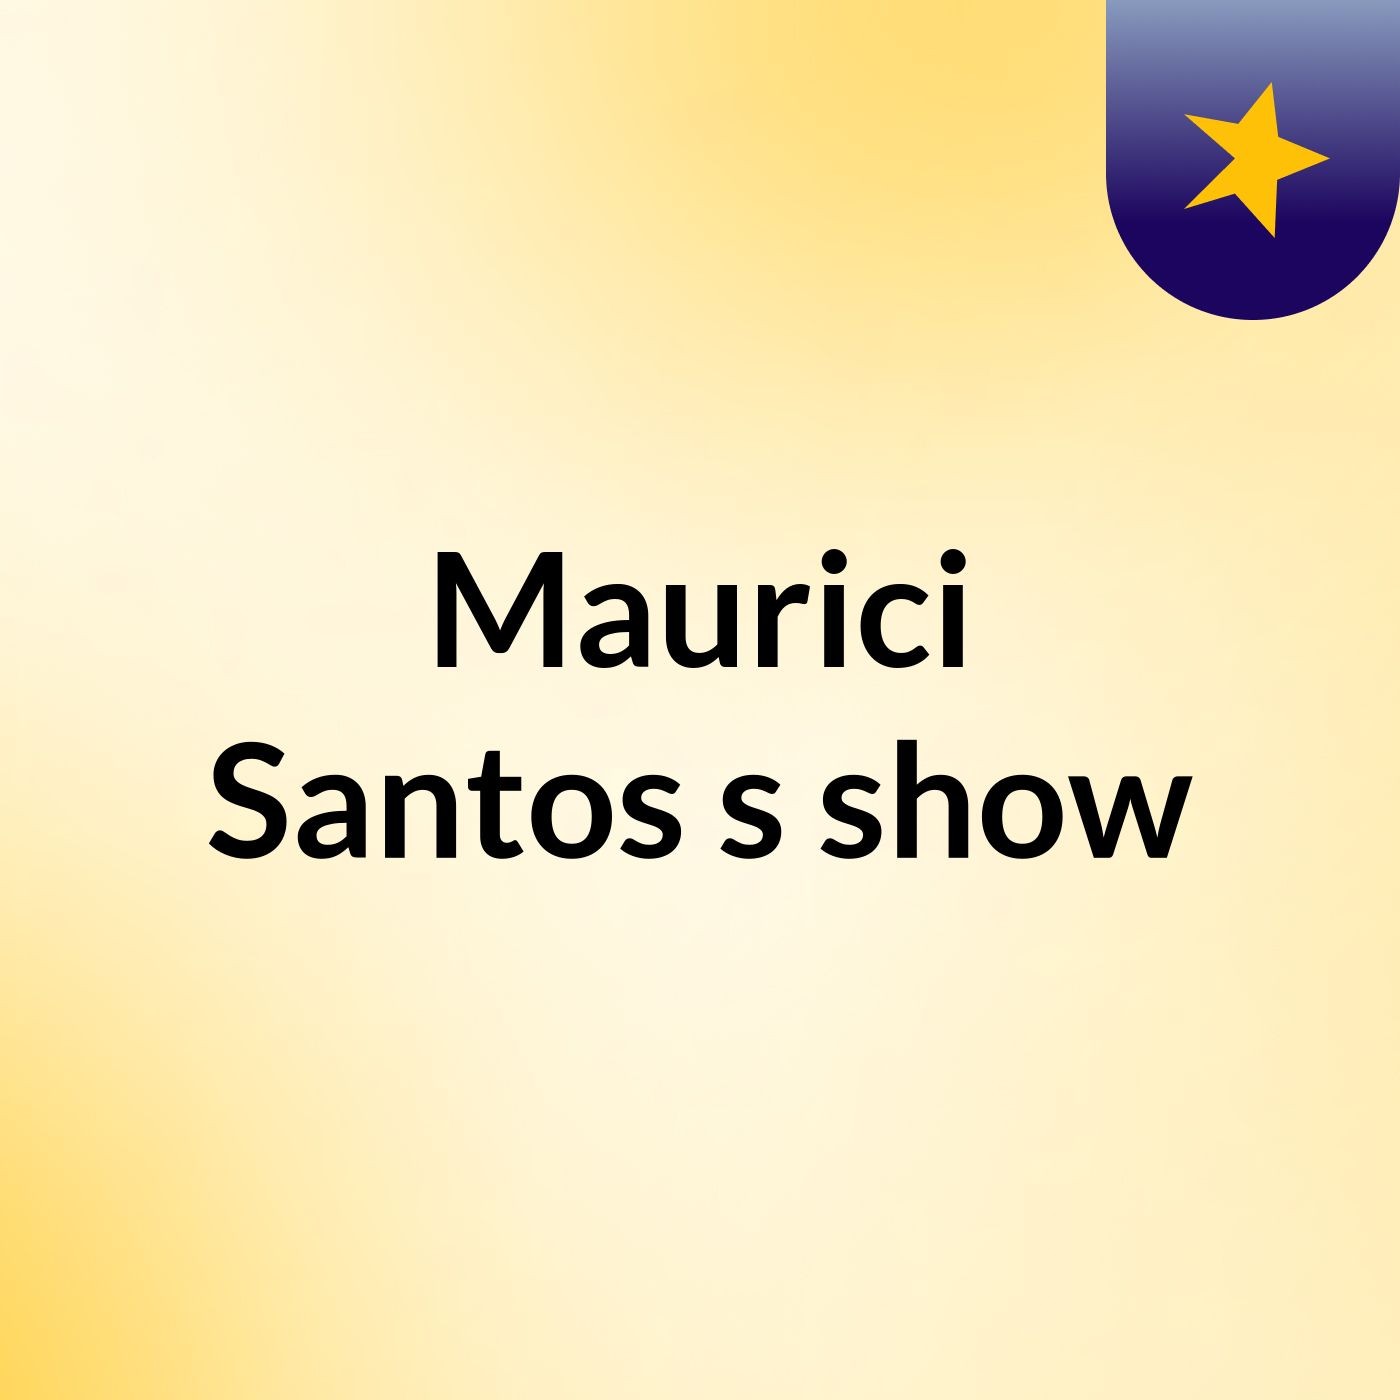 Maurici Santos's show